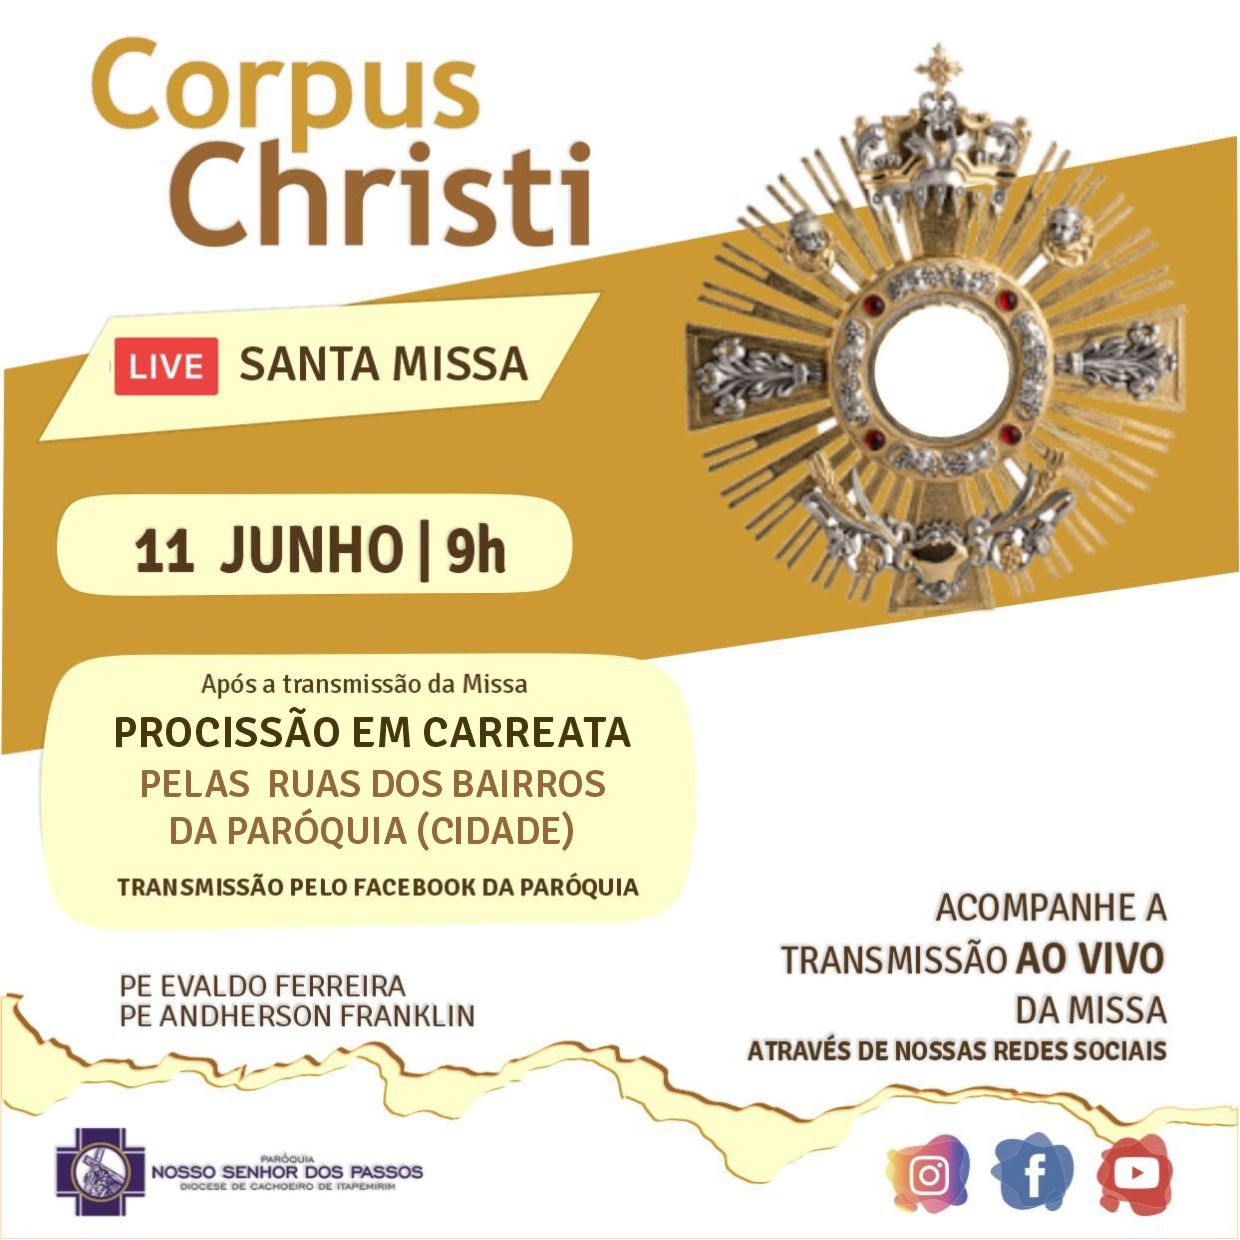 Corpus Christi - Live Santa Missa